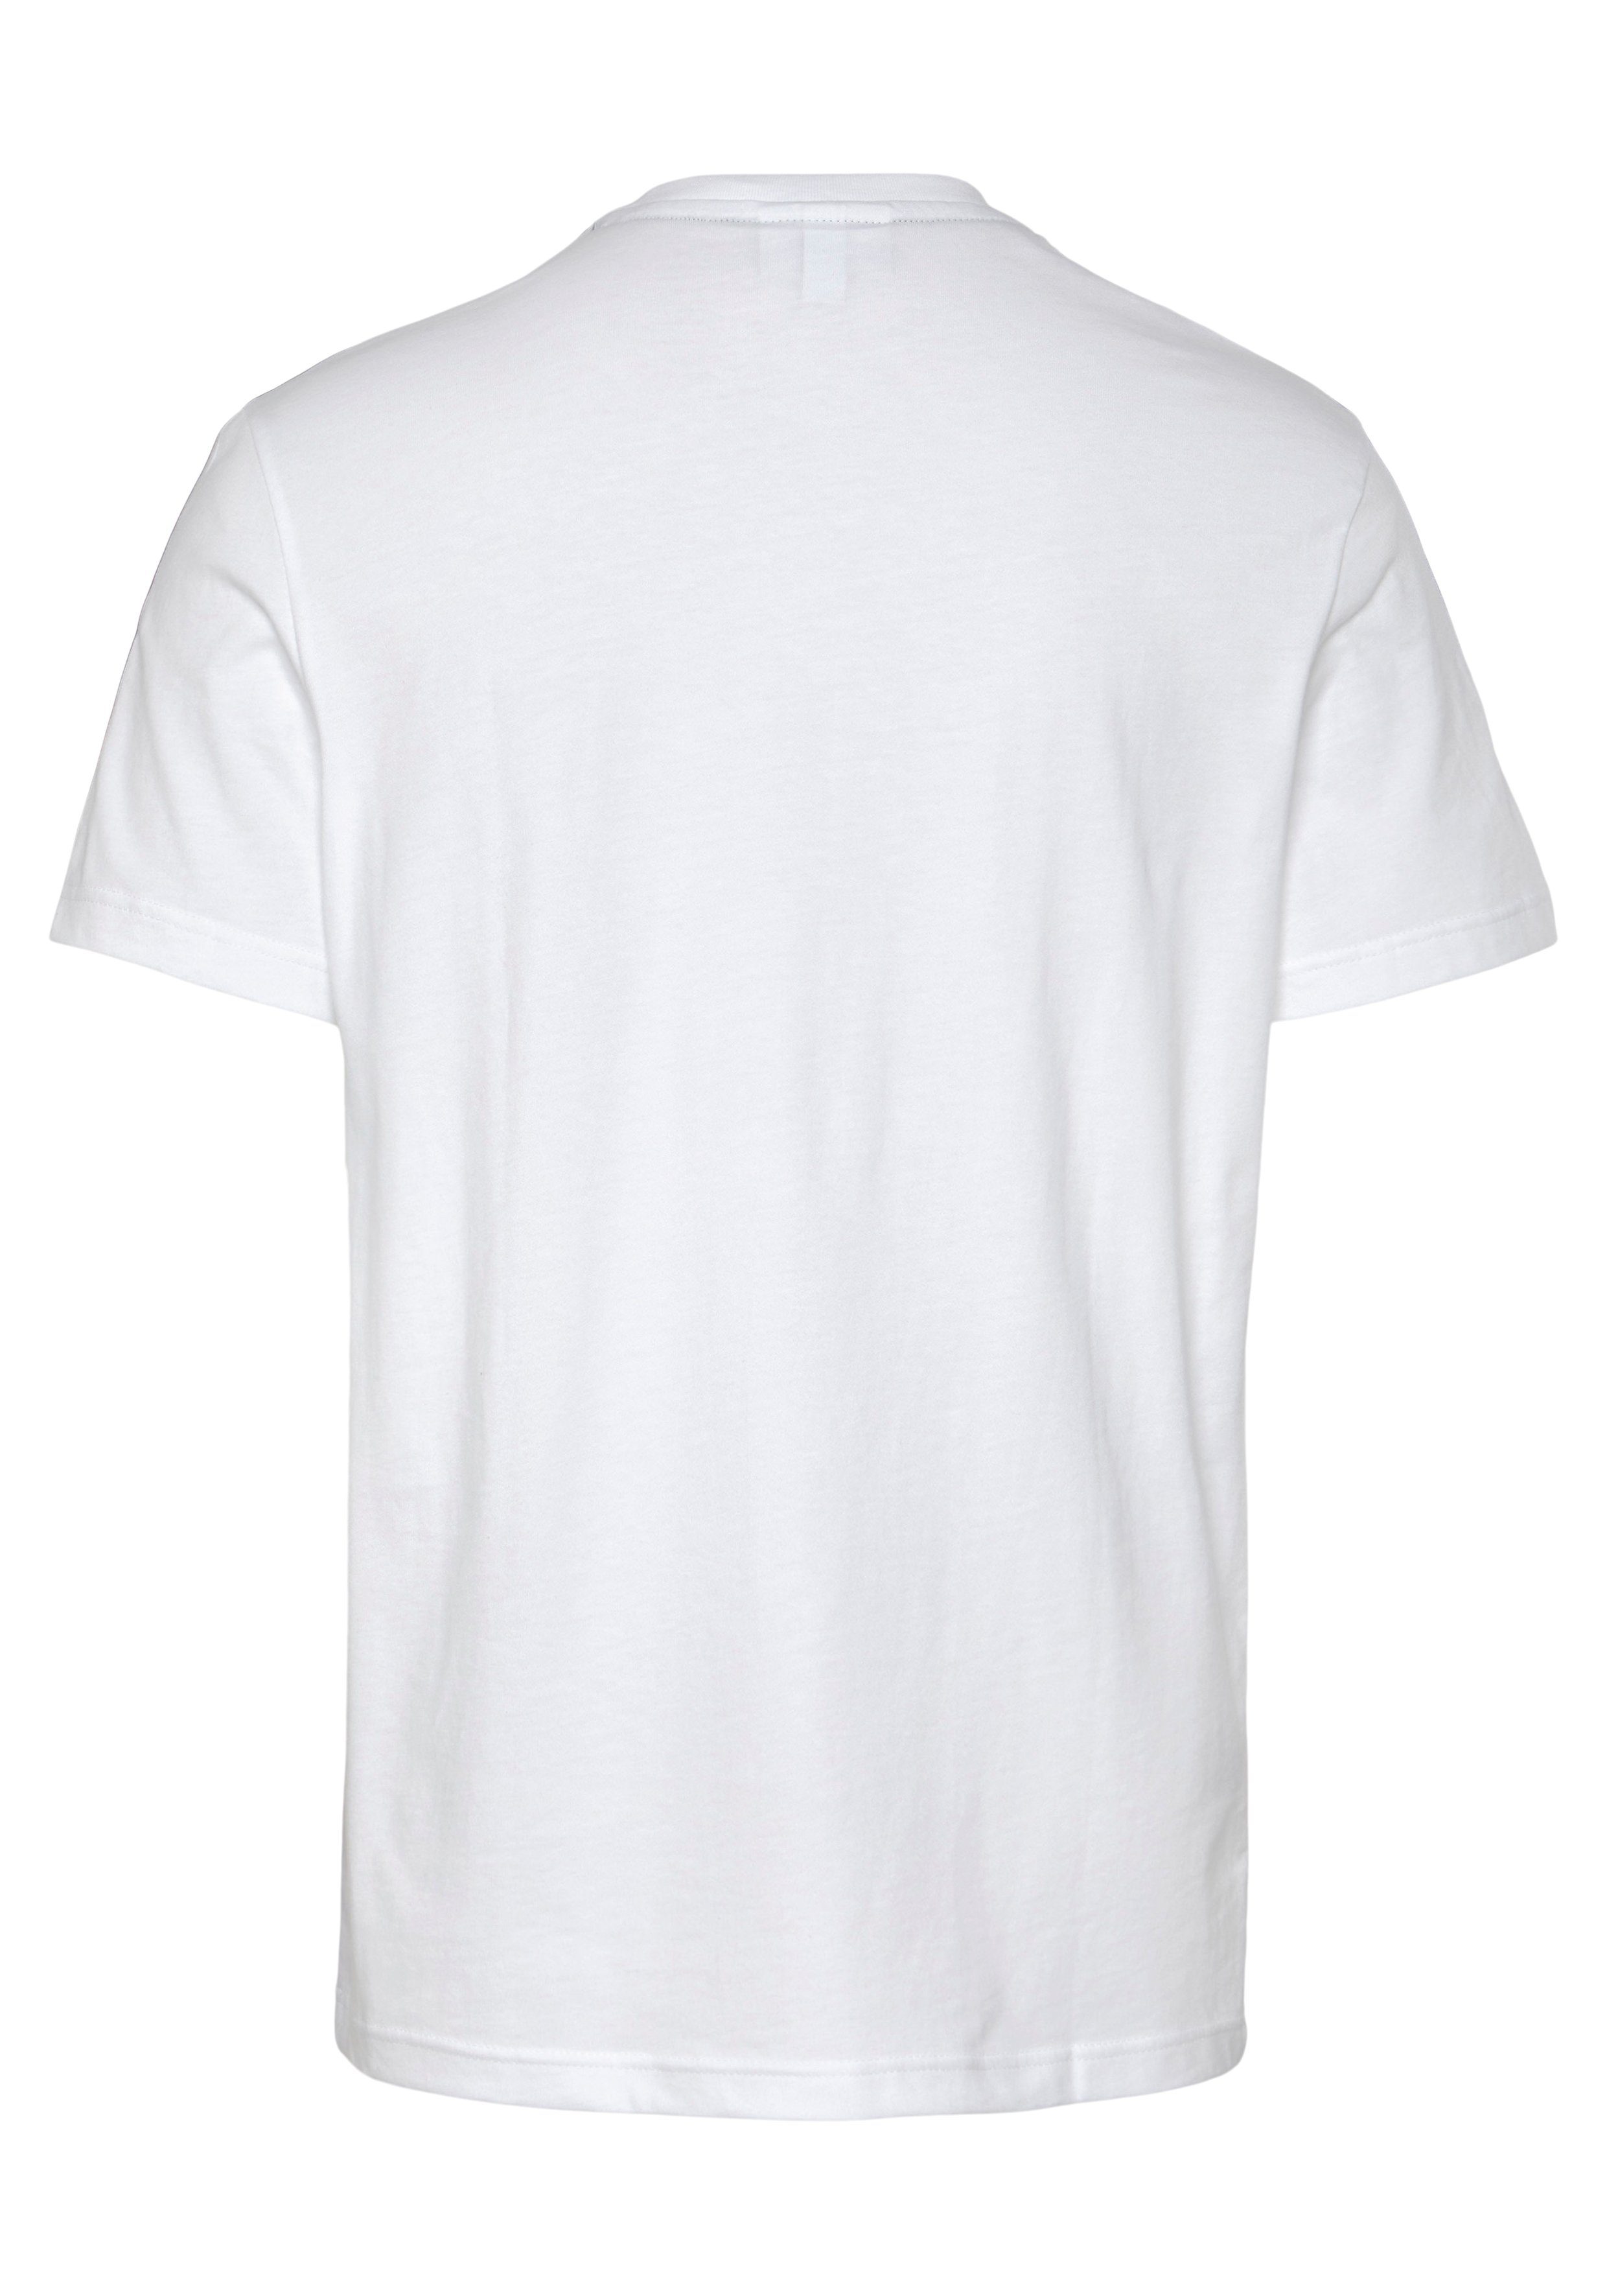 Lacoste T-Shirt mit an beschriftetem den Schultern Kontrastband white